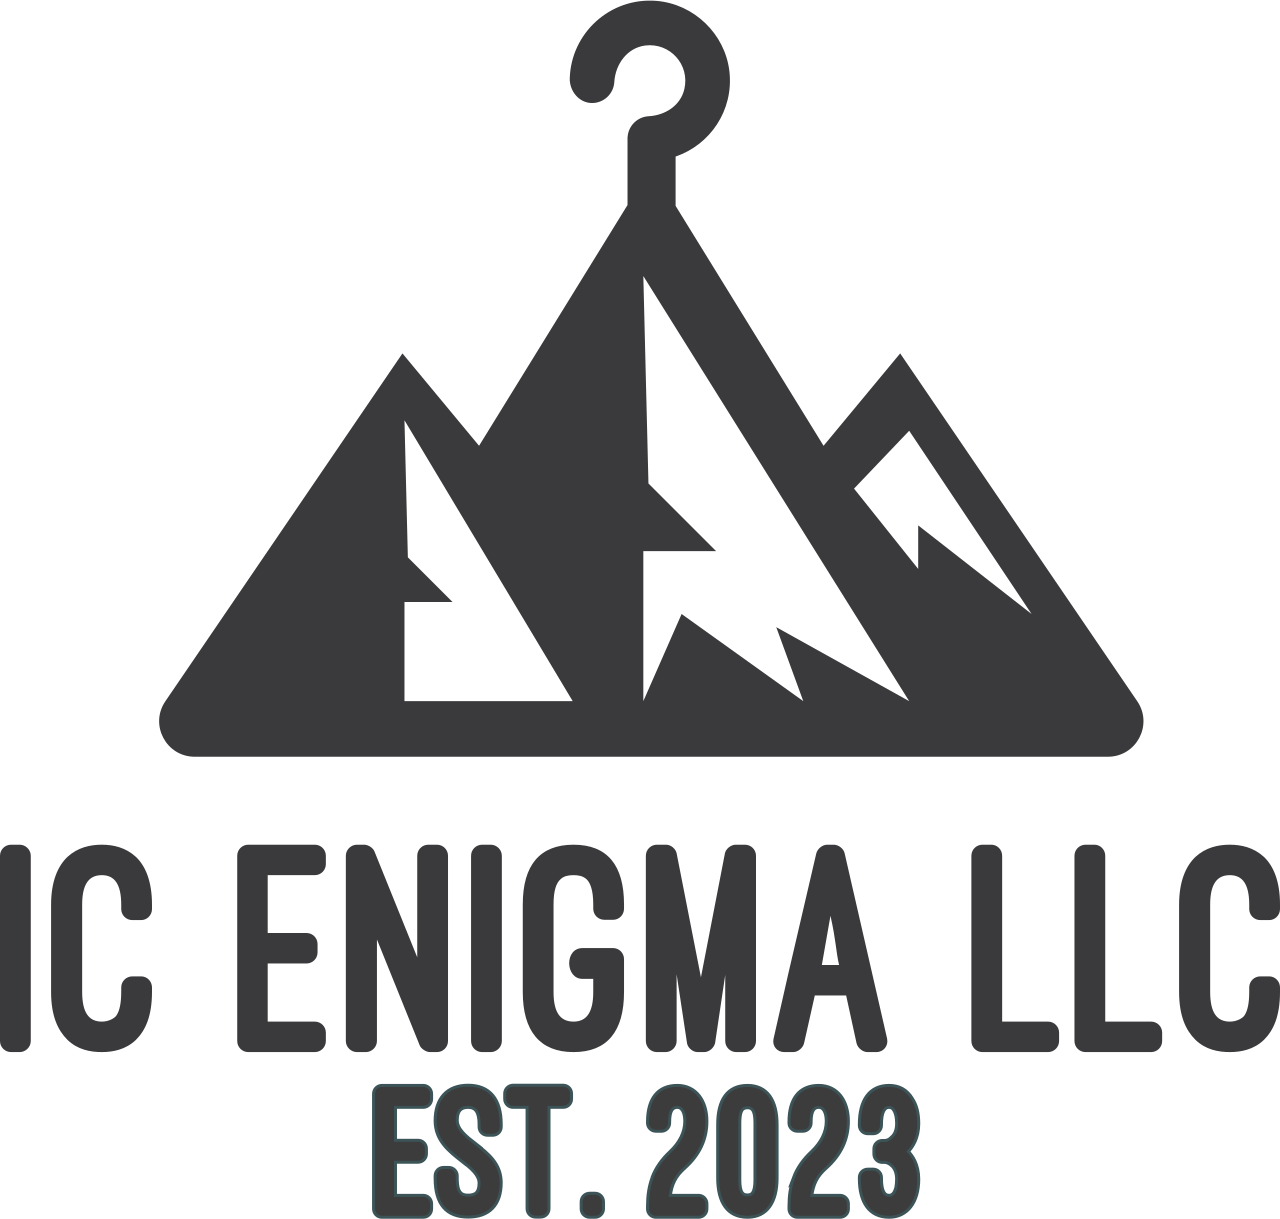 IC Enigma LLC's web page